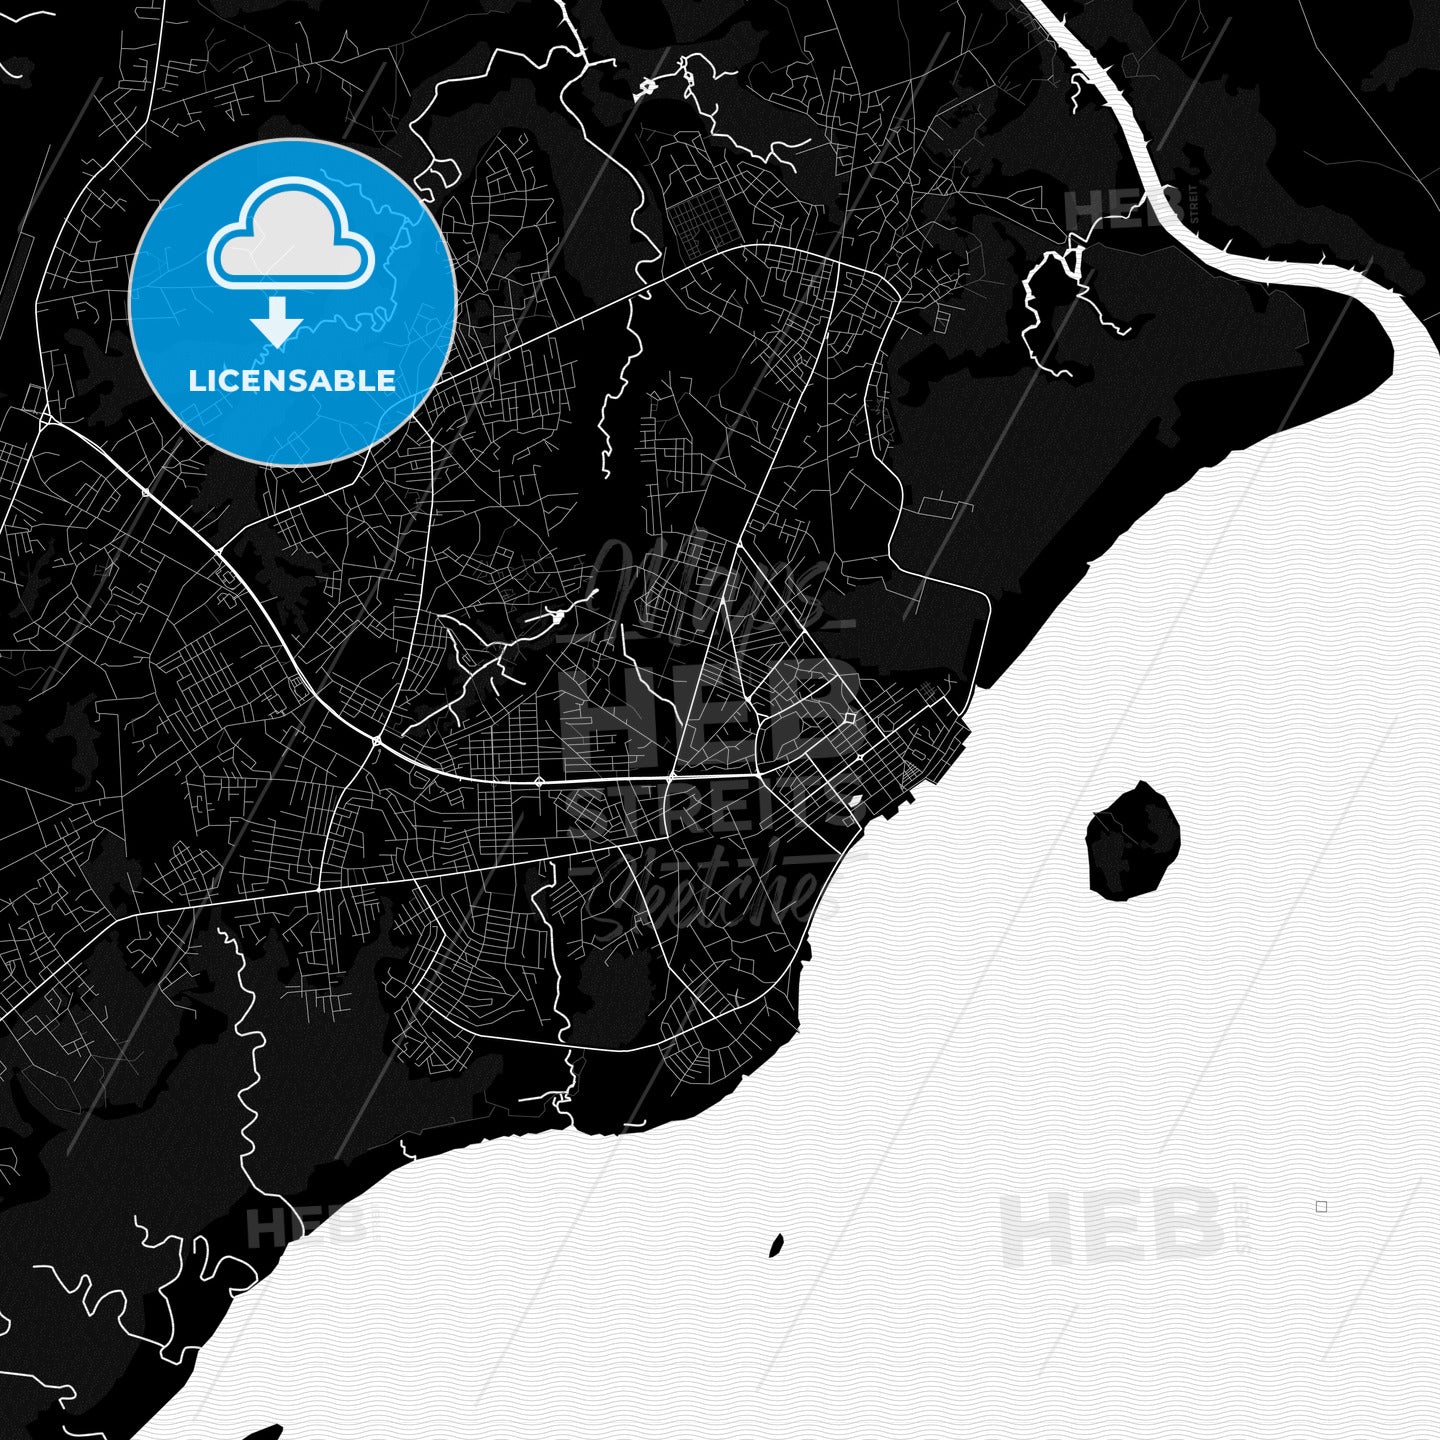 Bissau, Guinea Bissau PDF map